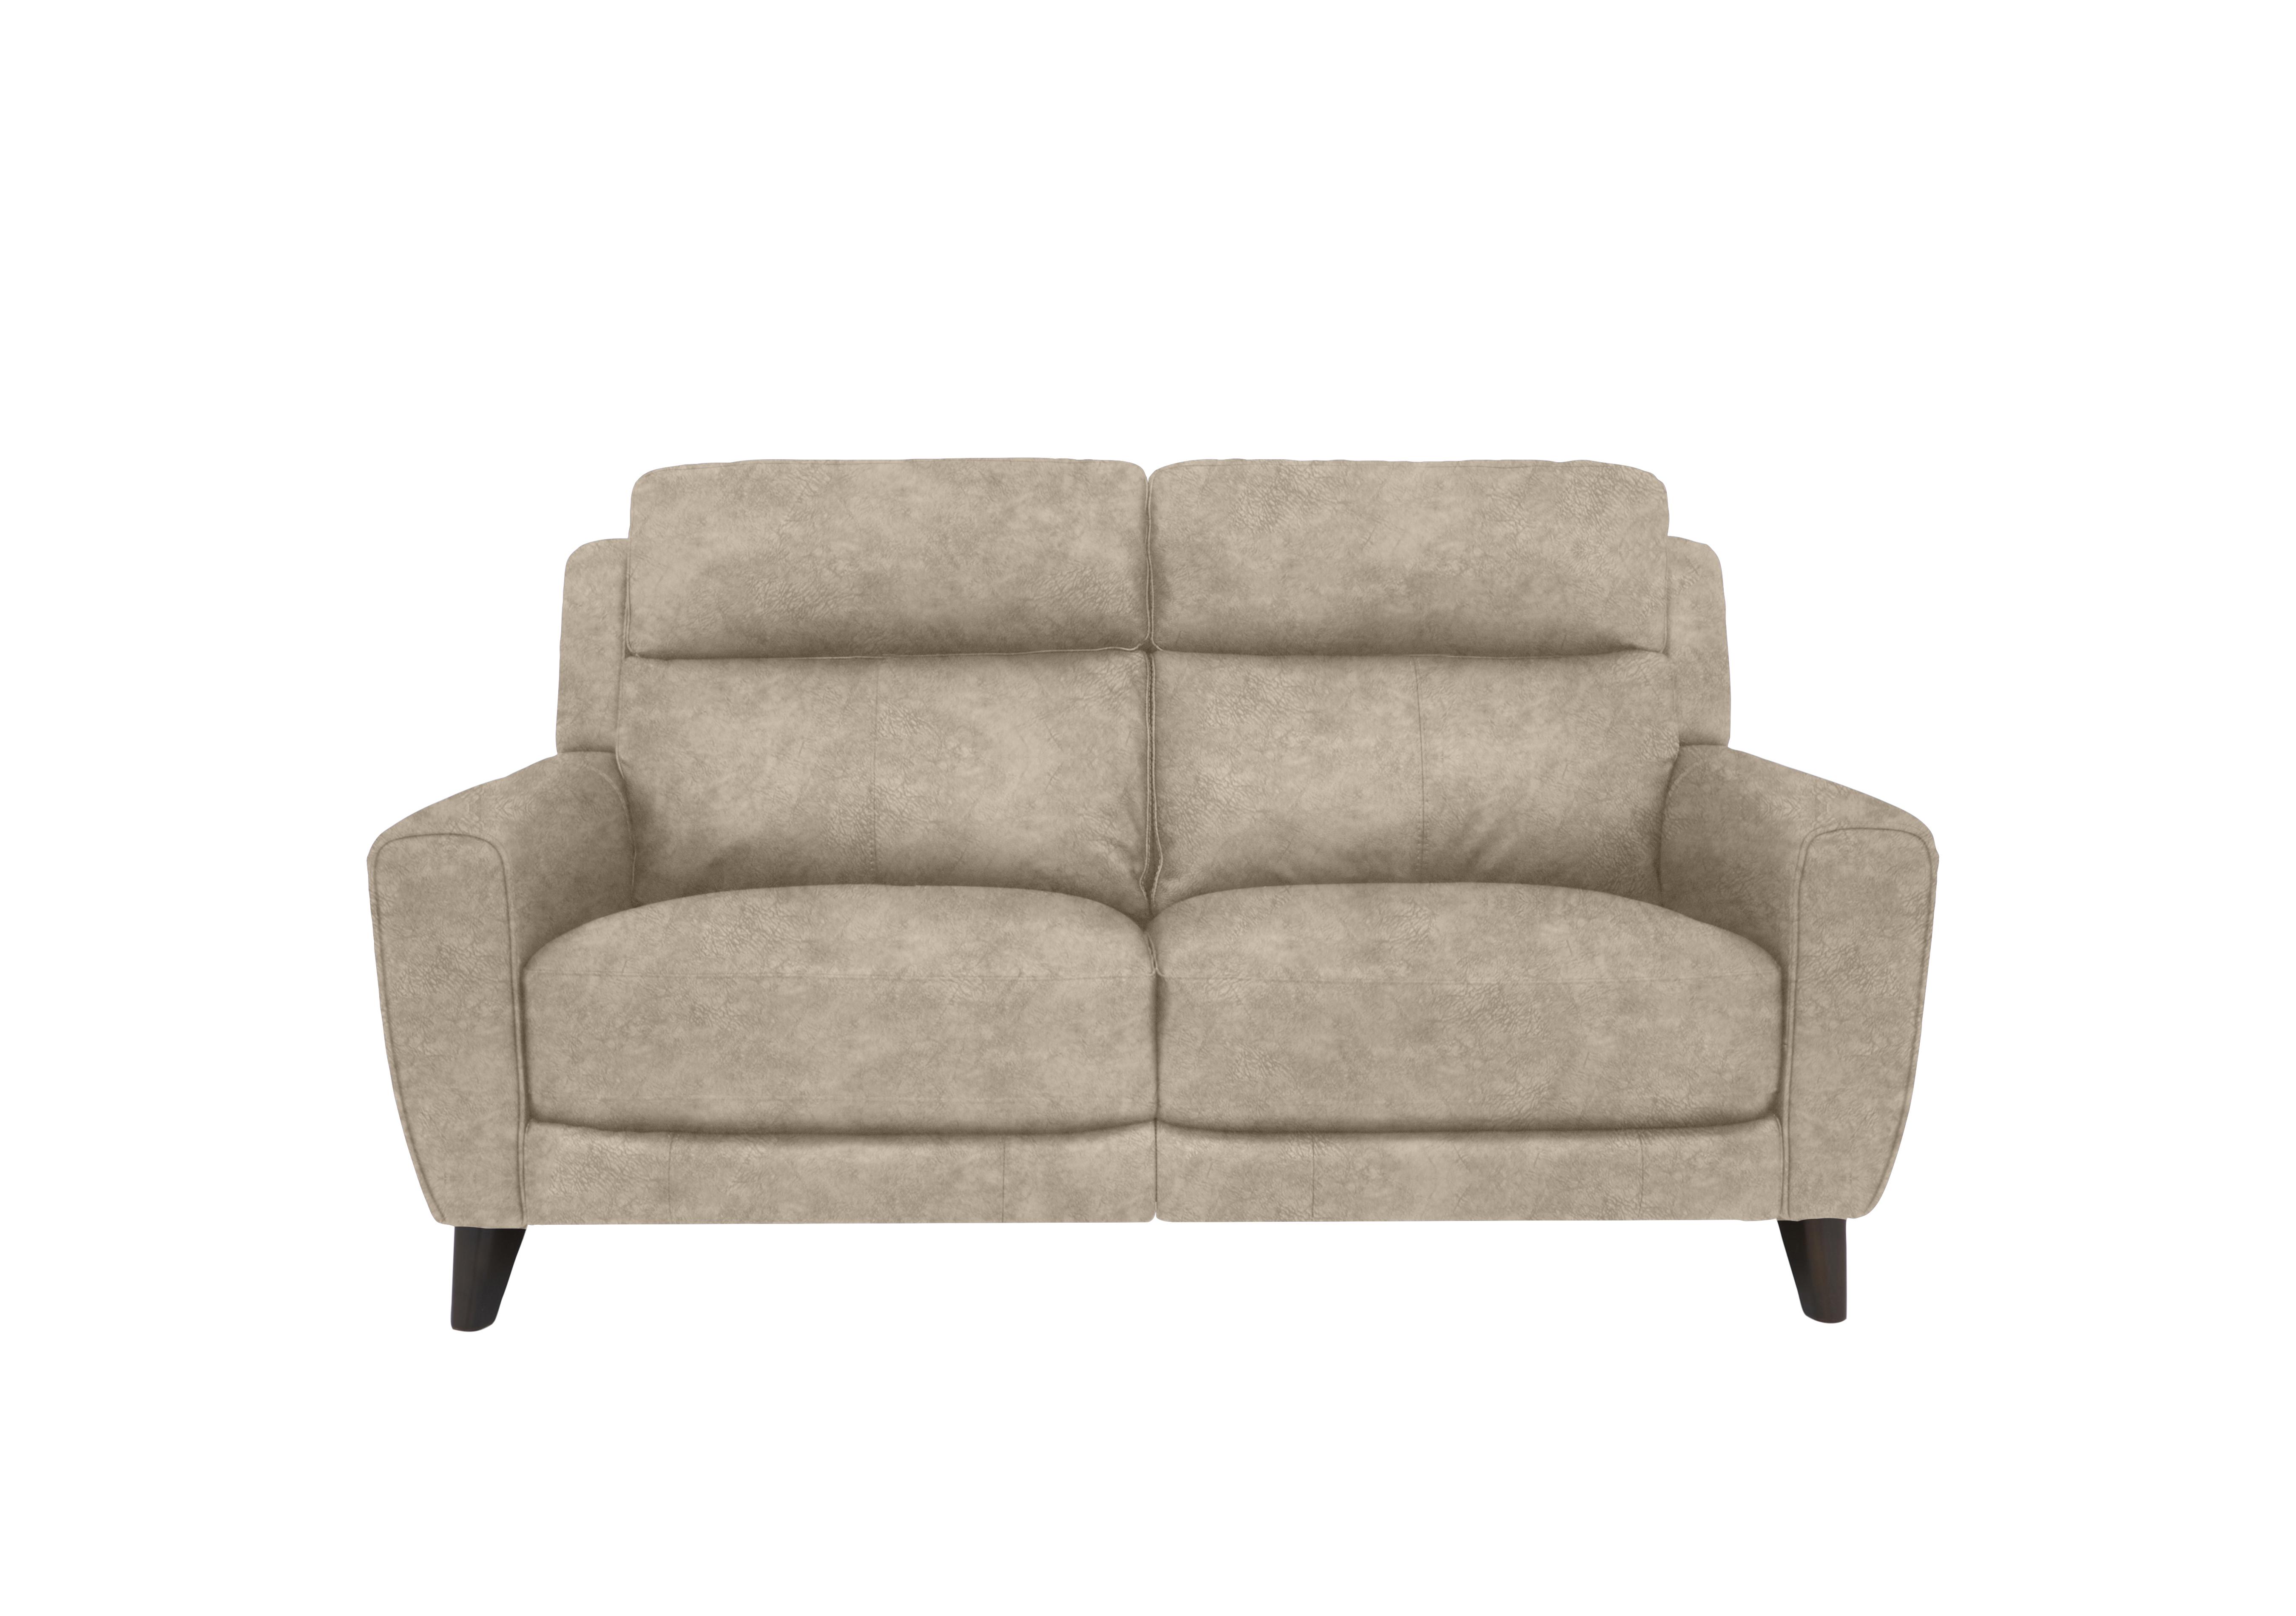 Zen 2 Seater Fabric Power Recliner Sofa with Power Headrests in Bfa-Bnn-R26 Cream on Furniture Village